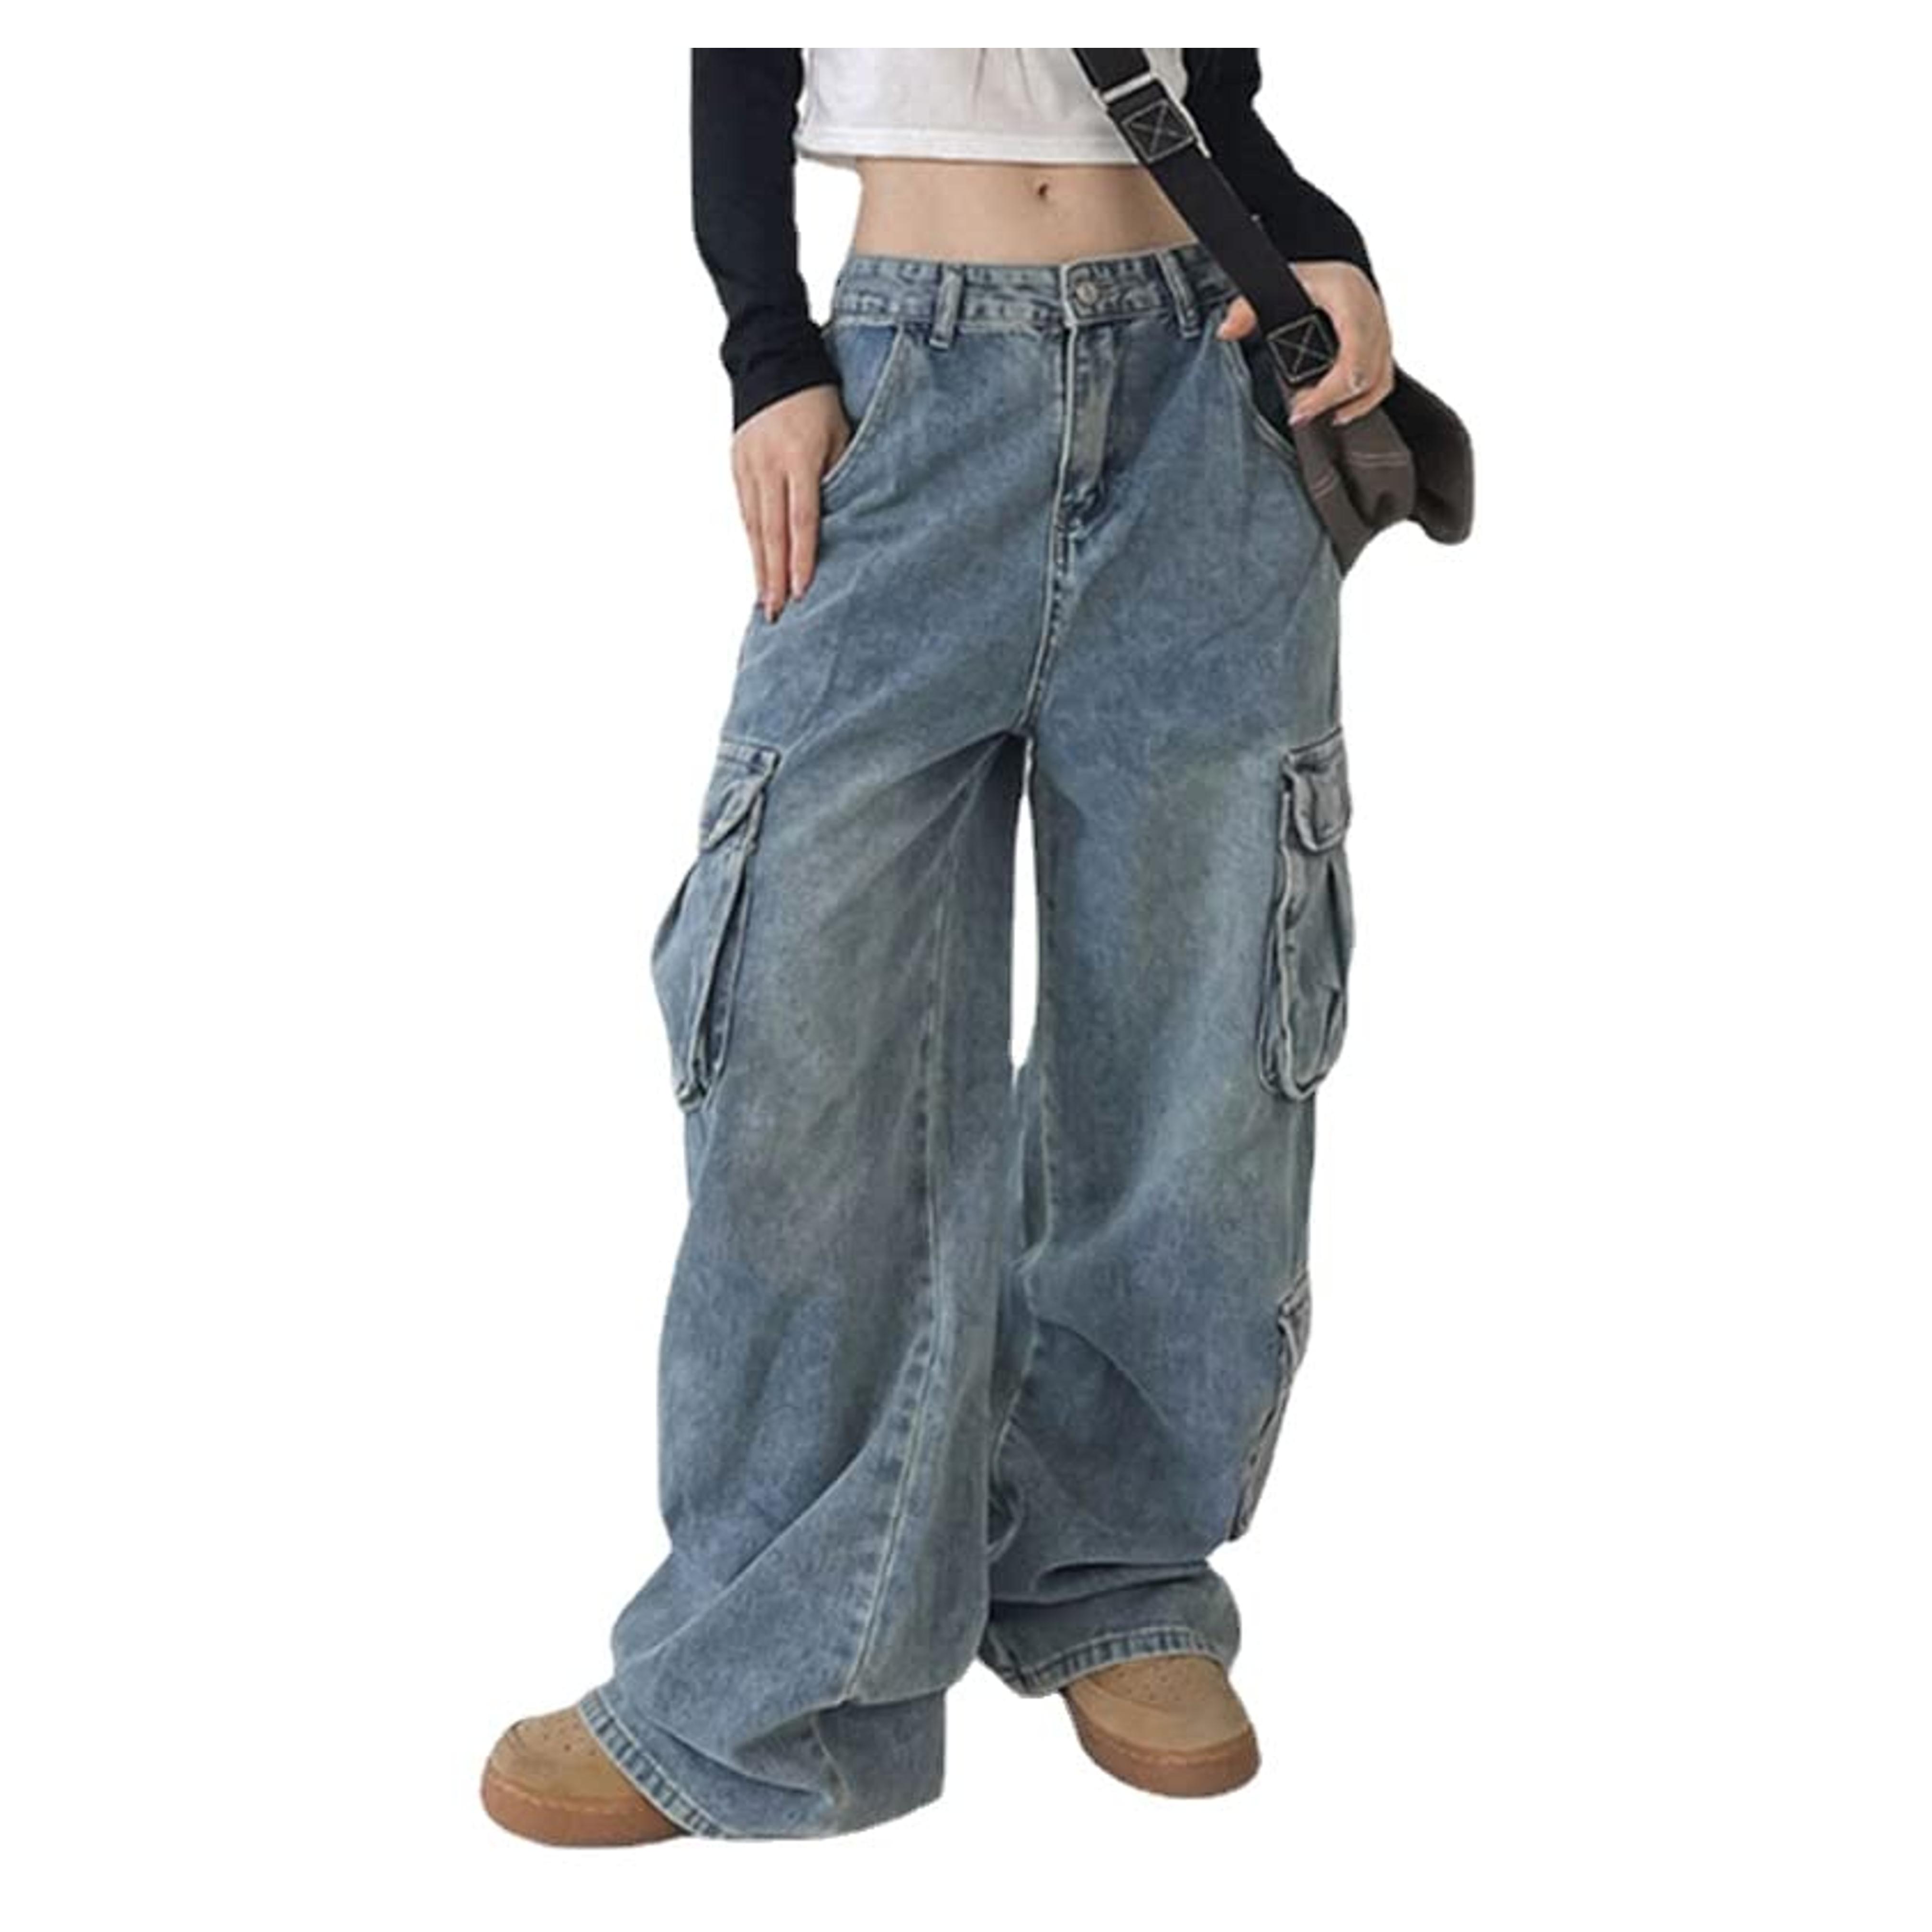 Women's Multi Pocket High Waist Fairy Grunge Jeans Alternative Harajuku Hippie Denim Pants Baggy Emo Acubi Trousers